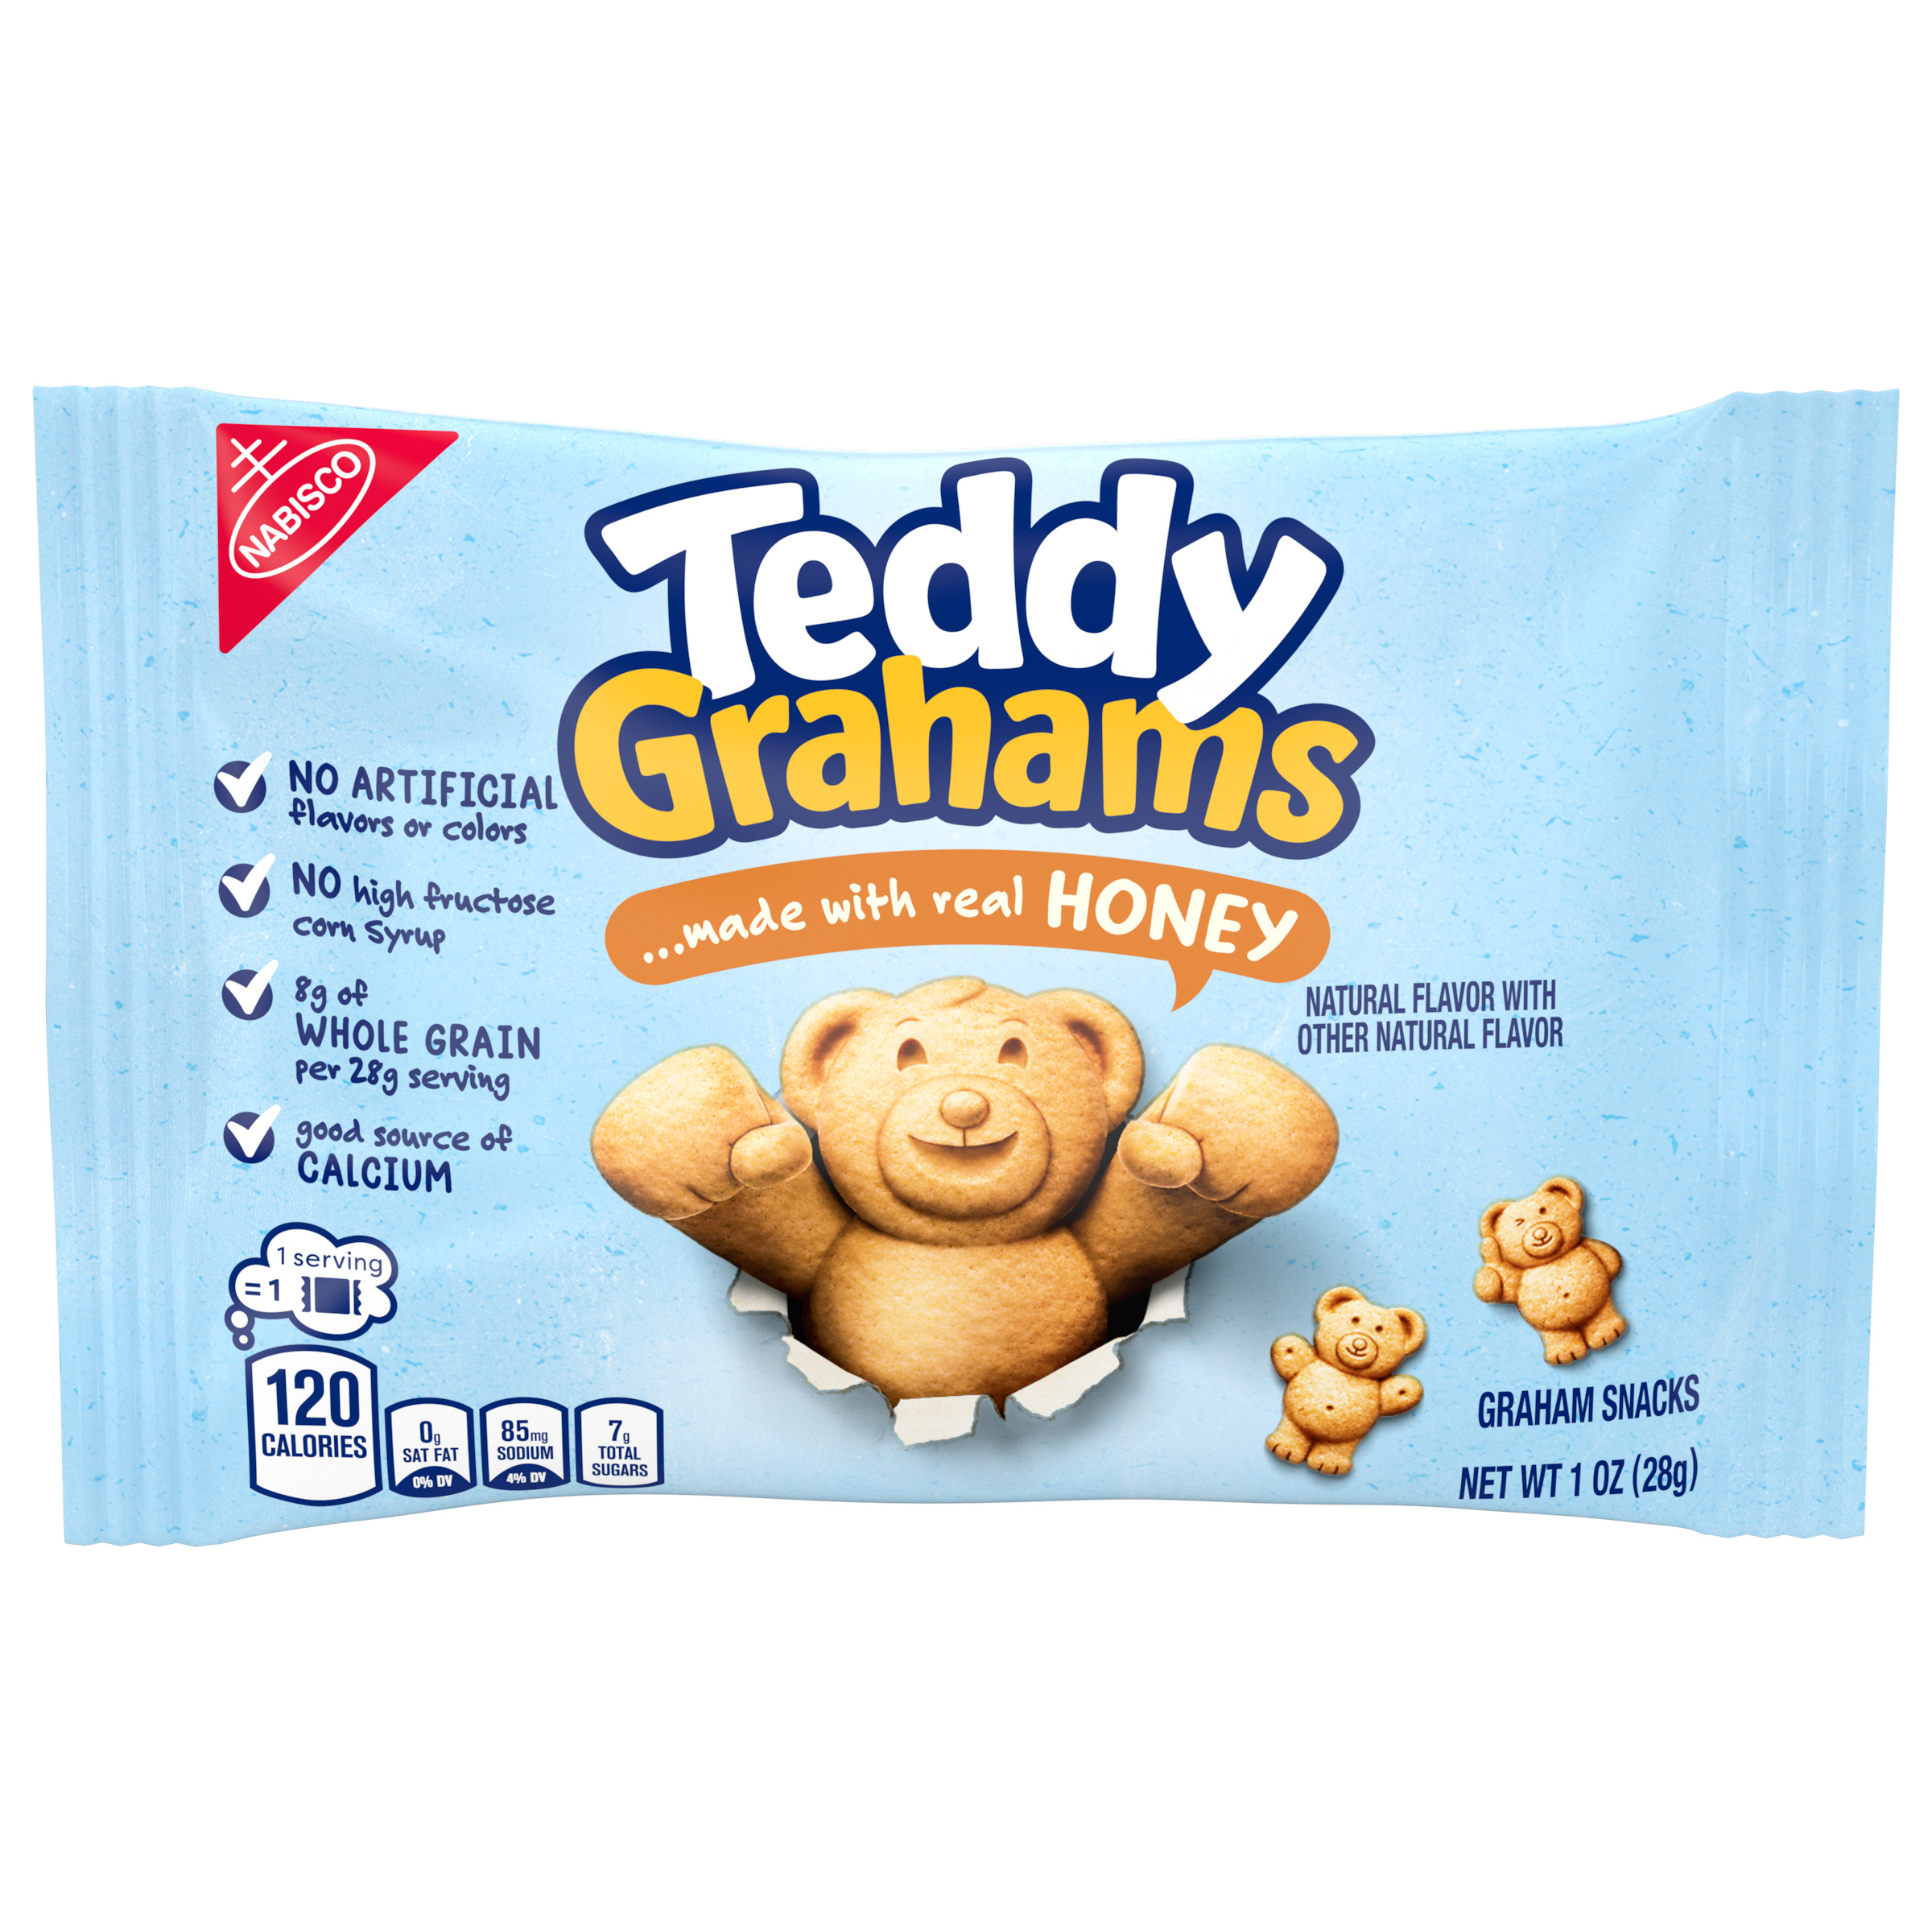 Teddy Grahams Honey Graham Snacks, 1 oz Snack Pack